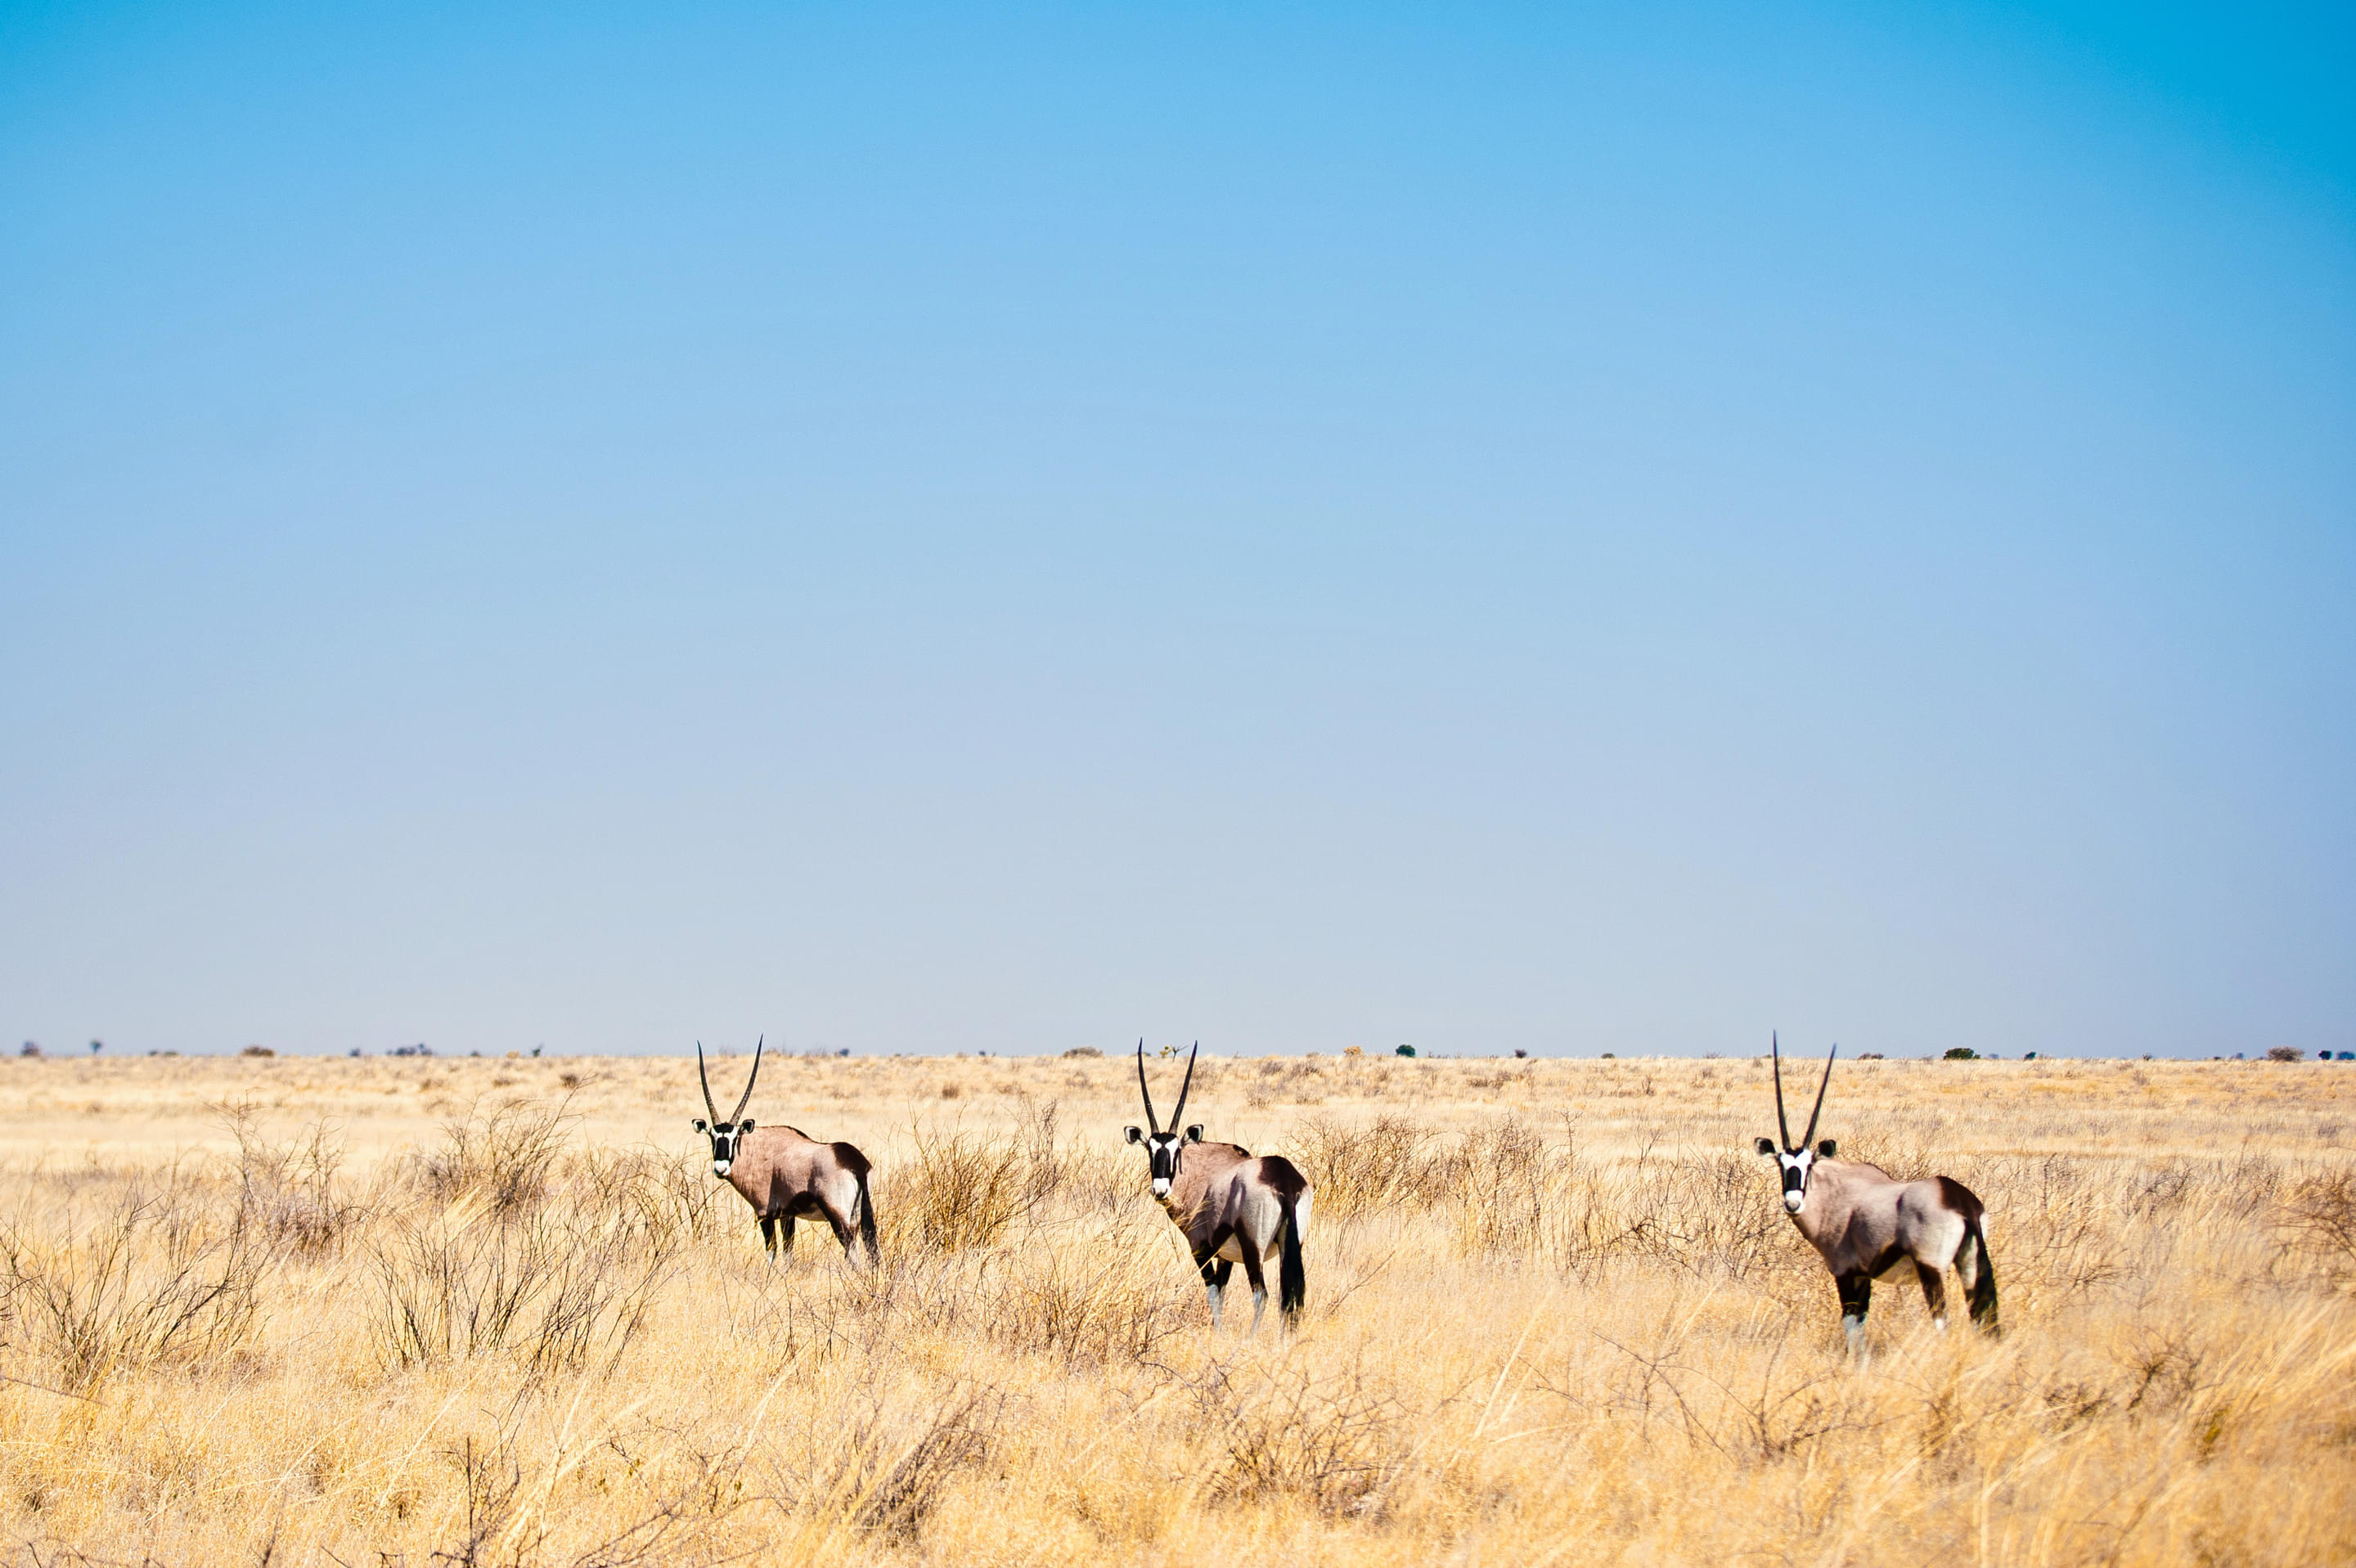 Kalahari Desert Overview